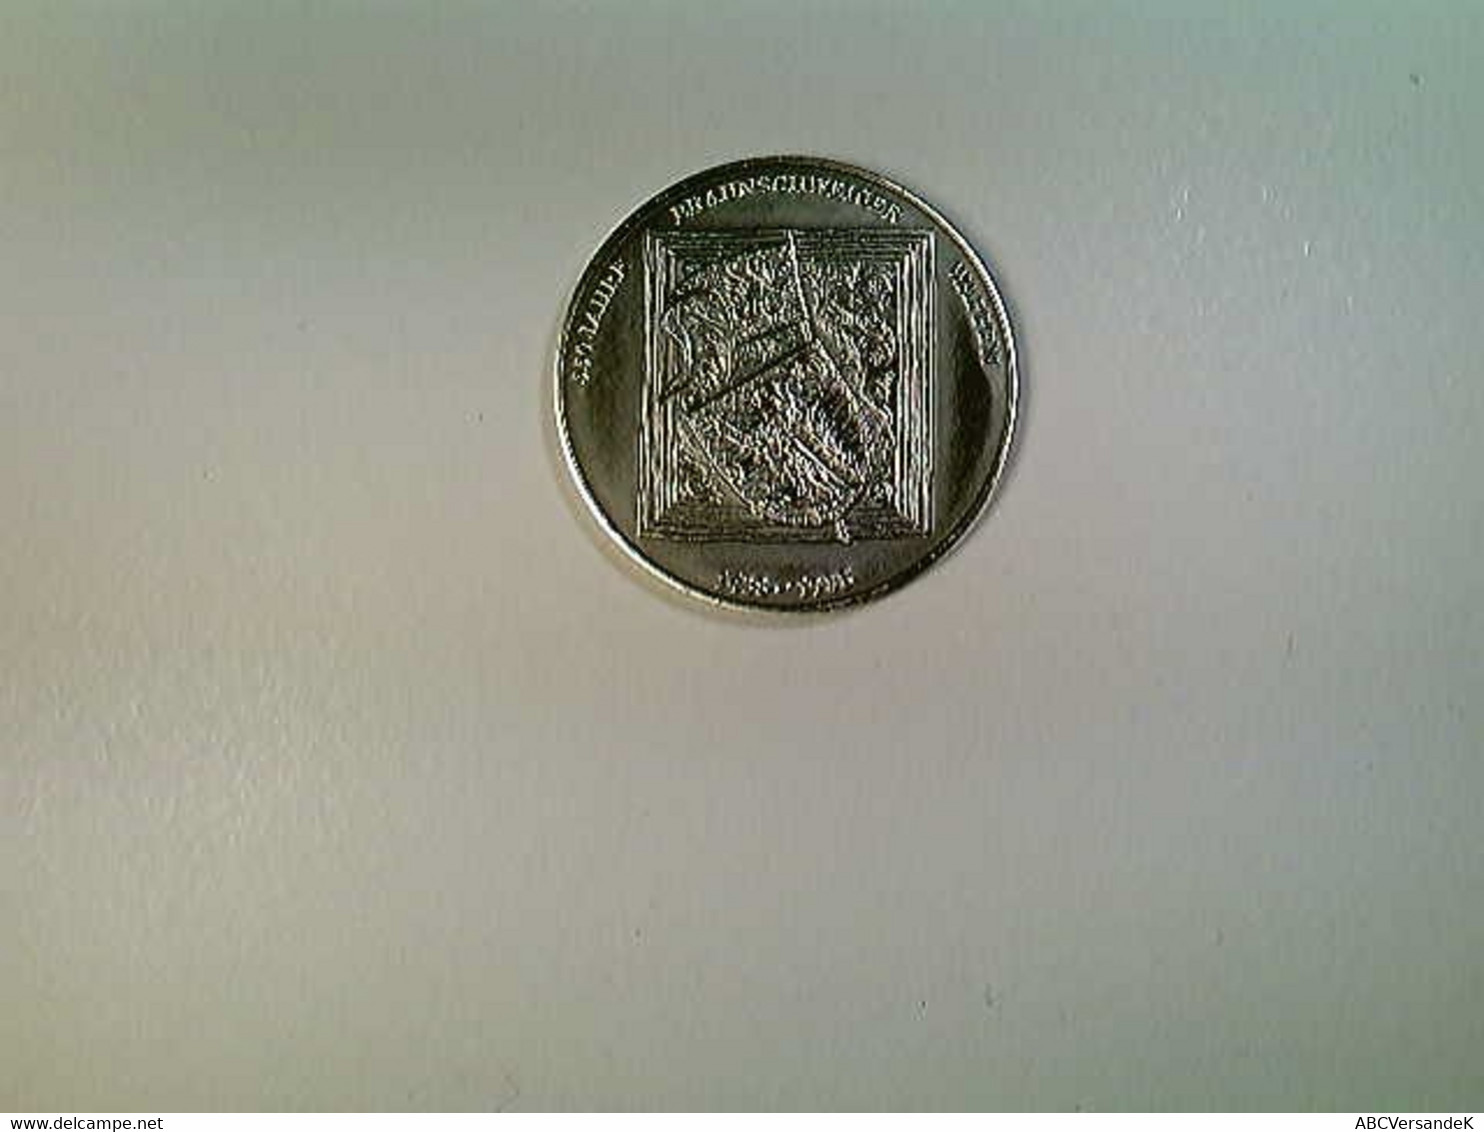 Medaille Braunschweig, Brunswick, 550 Jahre 1438-1988, Limitiert Nr. 167, Silber 999 - Numismatik